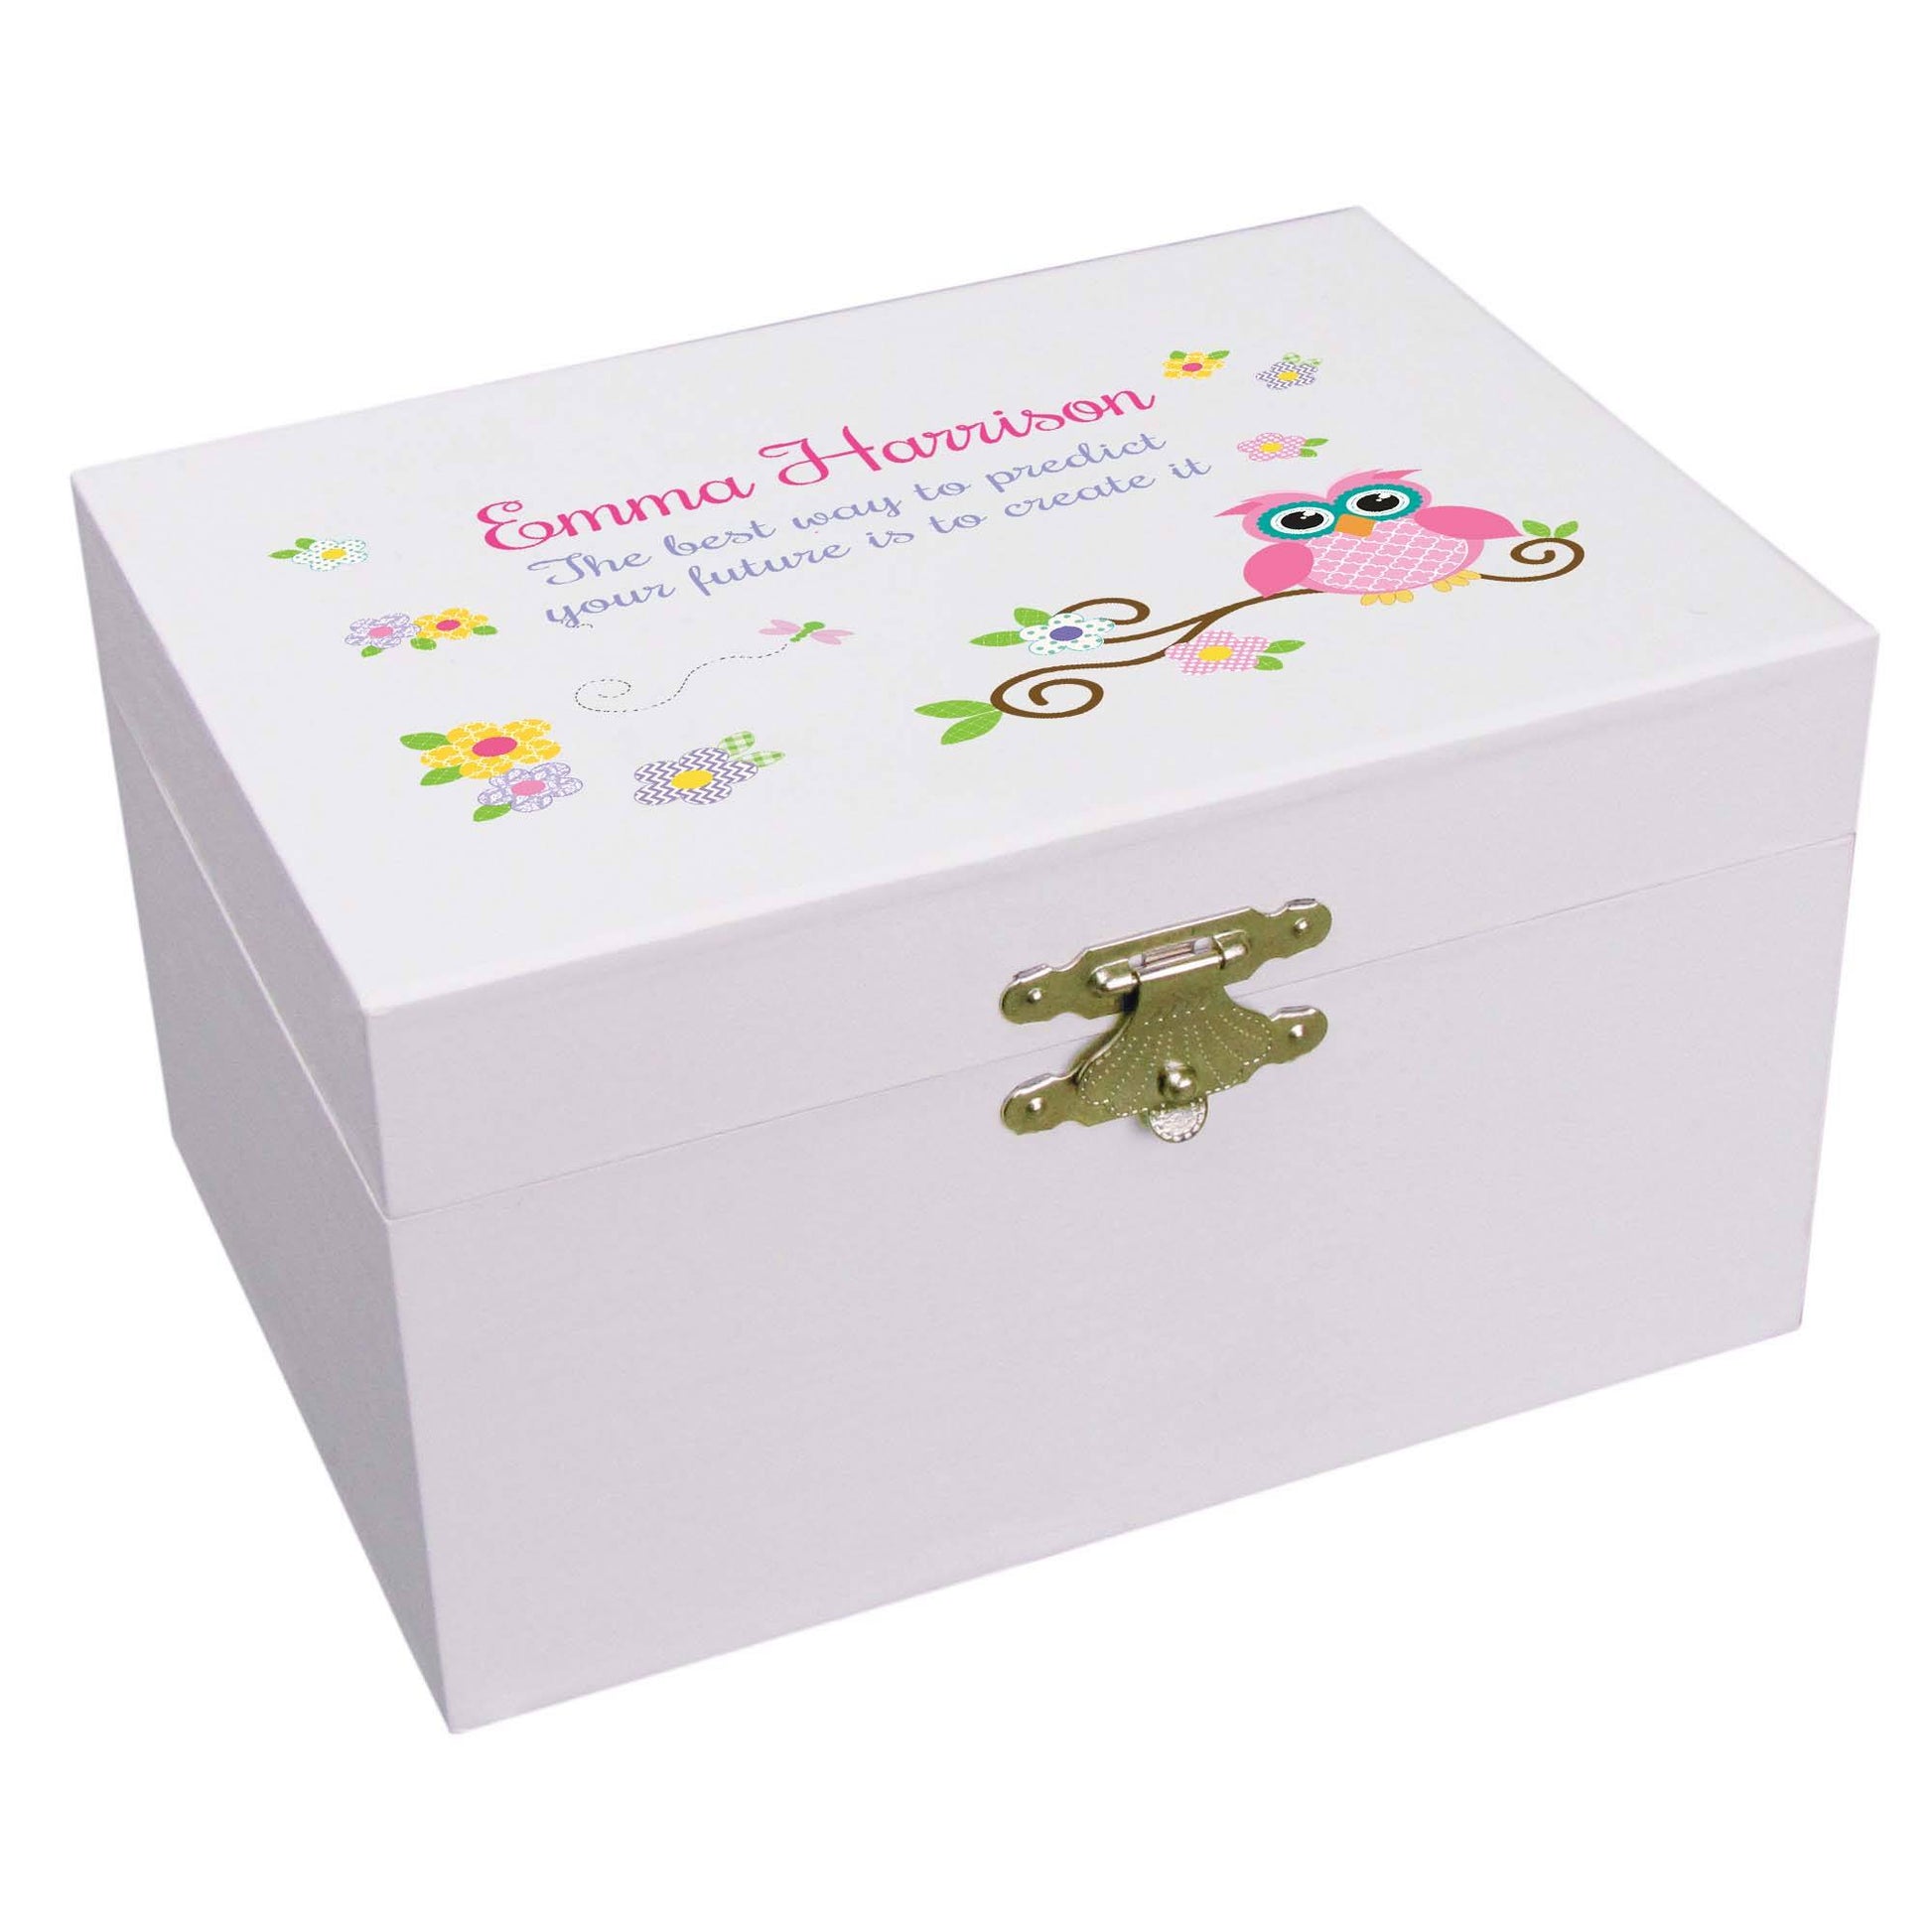 Personalized Calico Pink Owl Ballerina Jewelry Box 